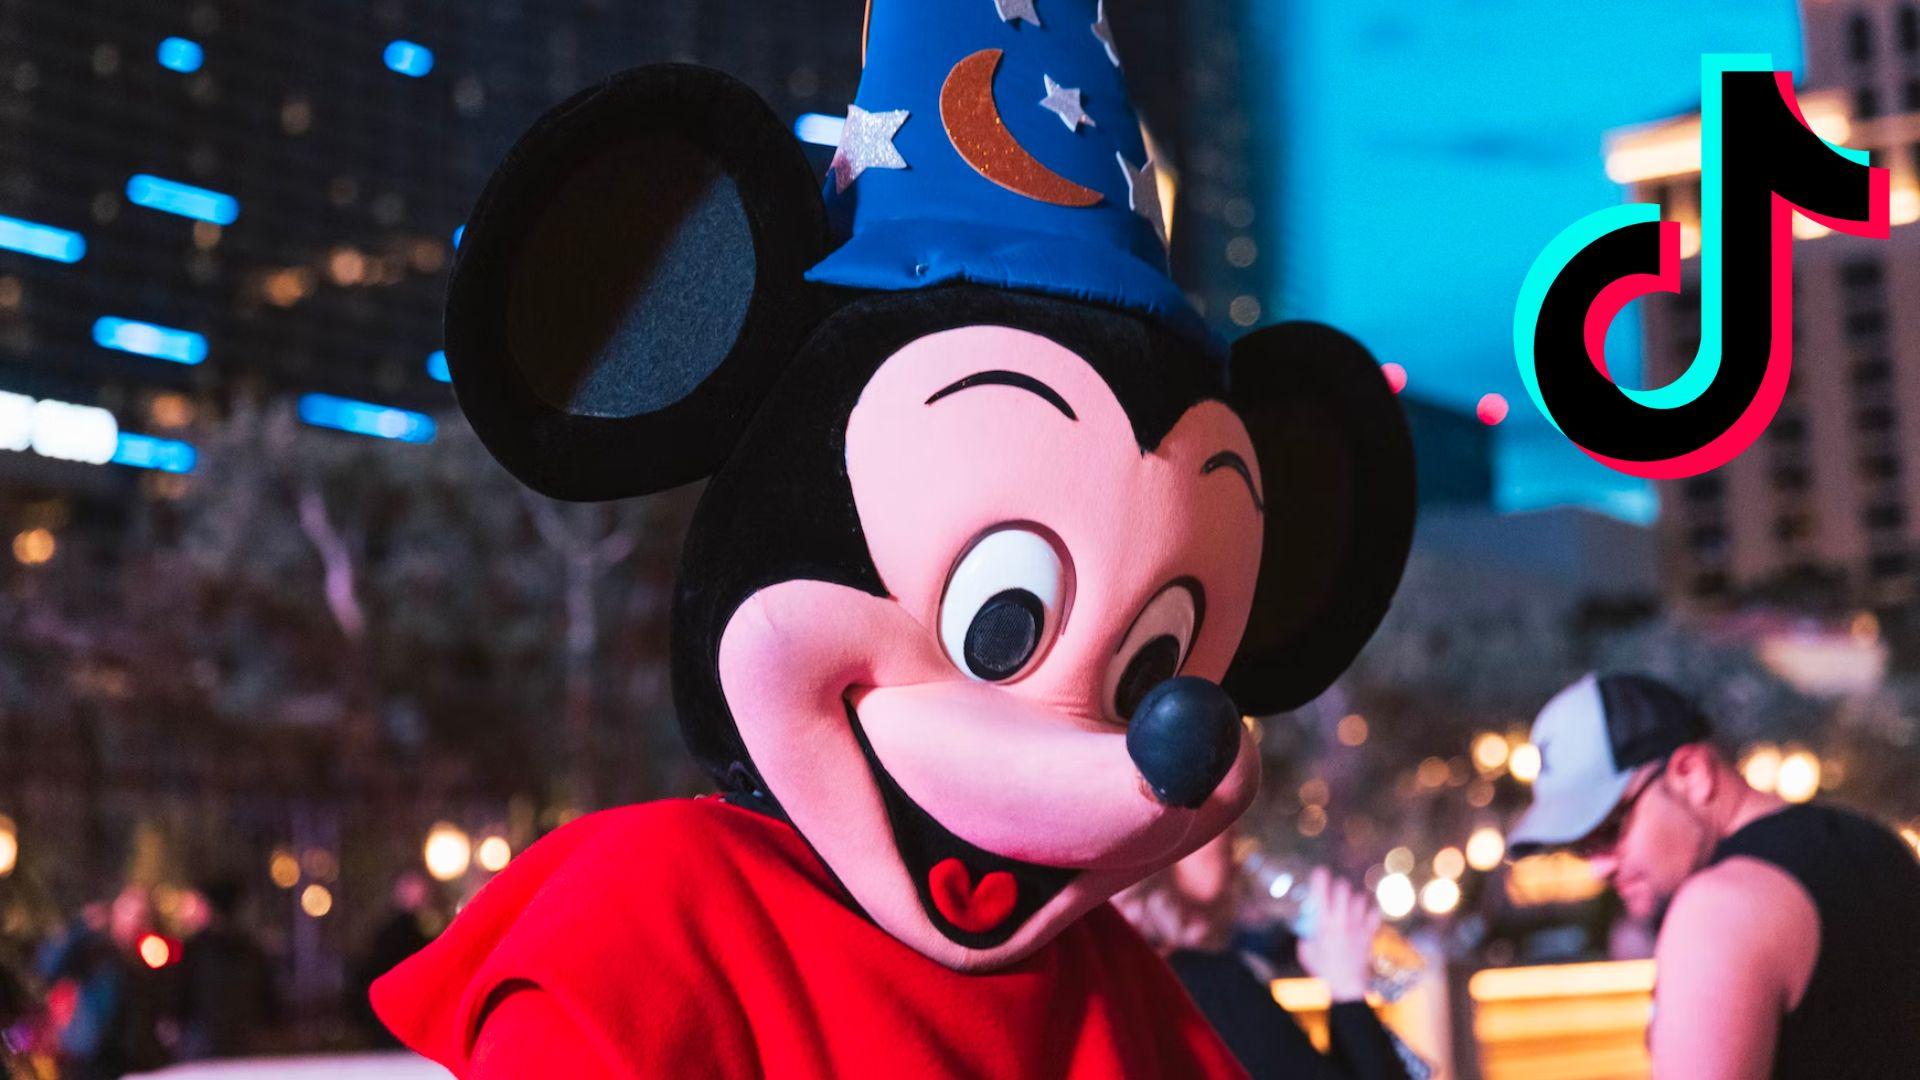 Mickey Mouse in red jacket next to TiKTok logo